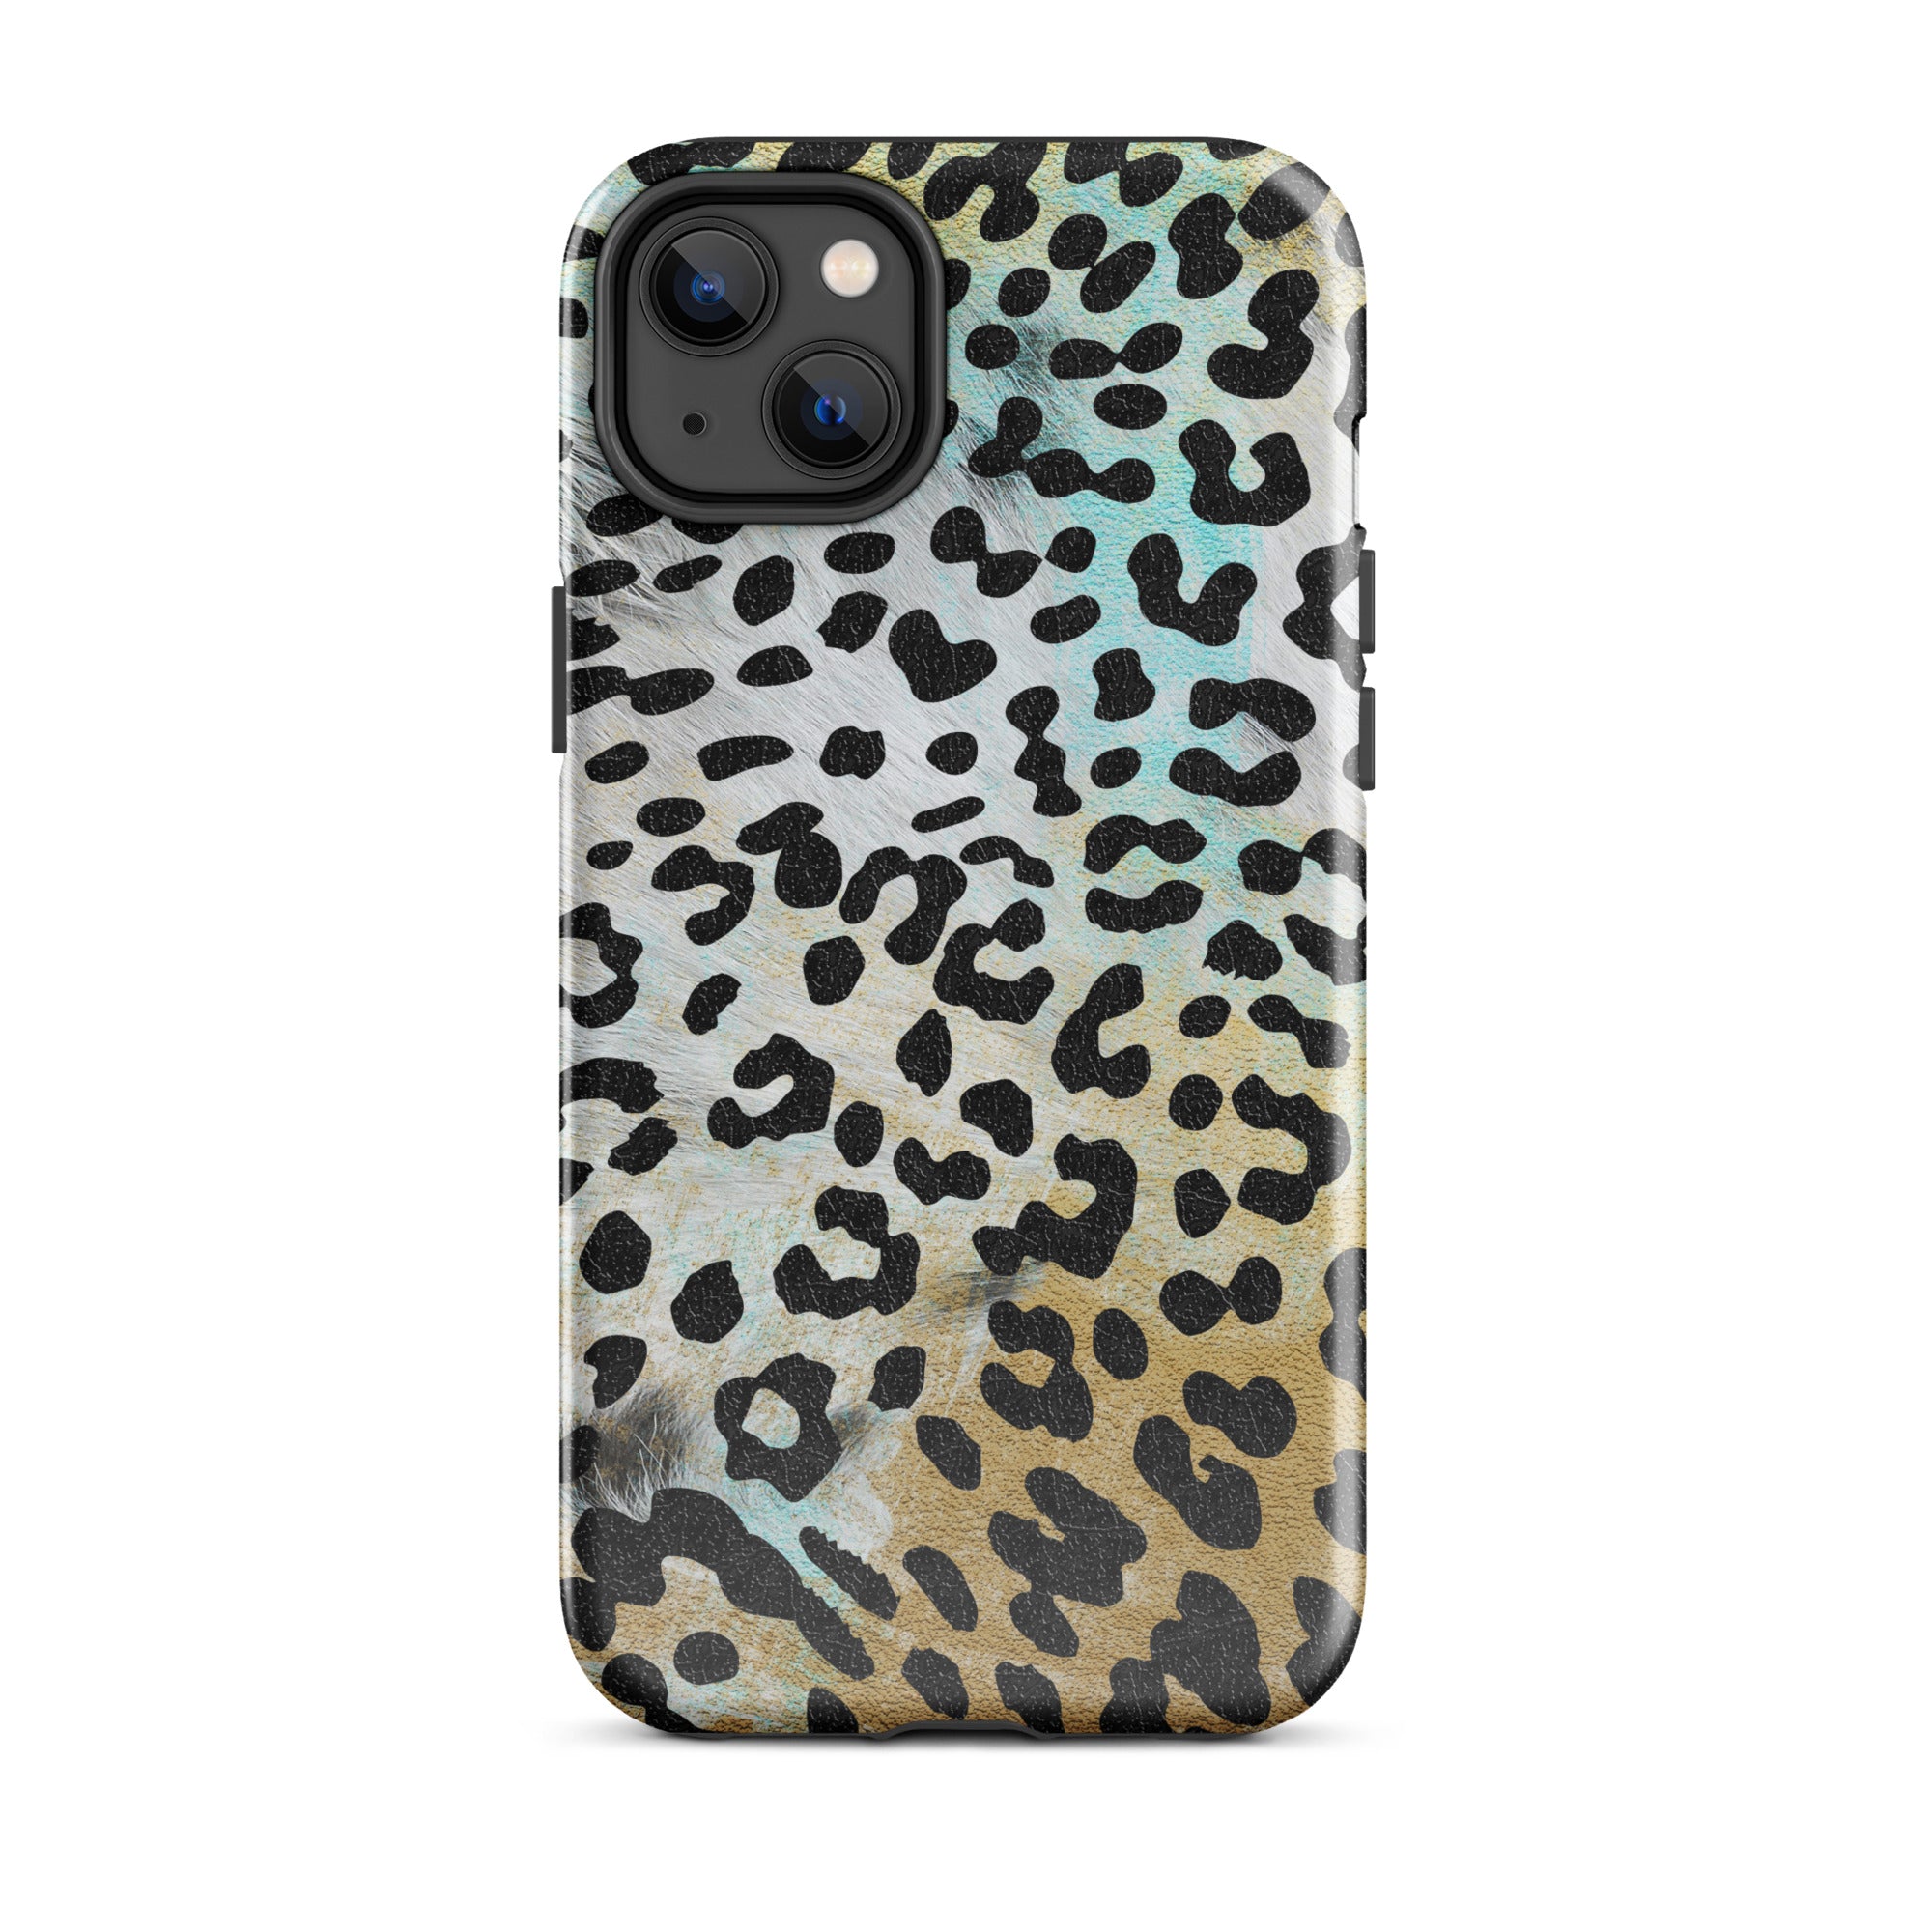 Tough Case for iPhone®- Safari Animal Print Design 04